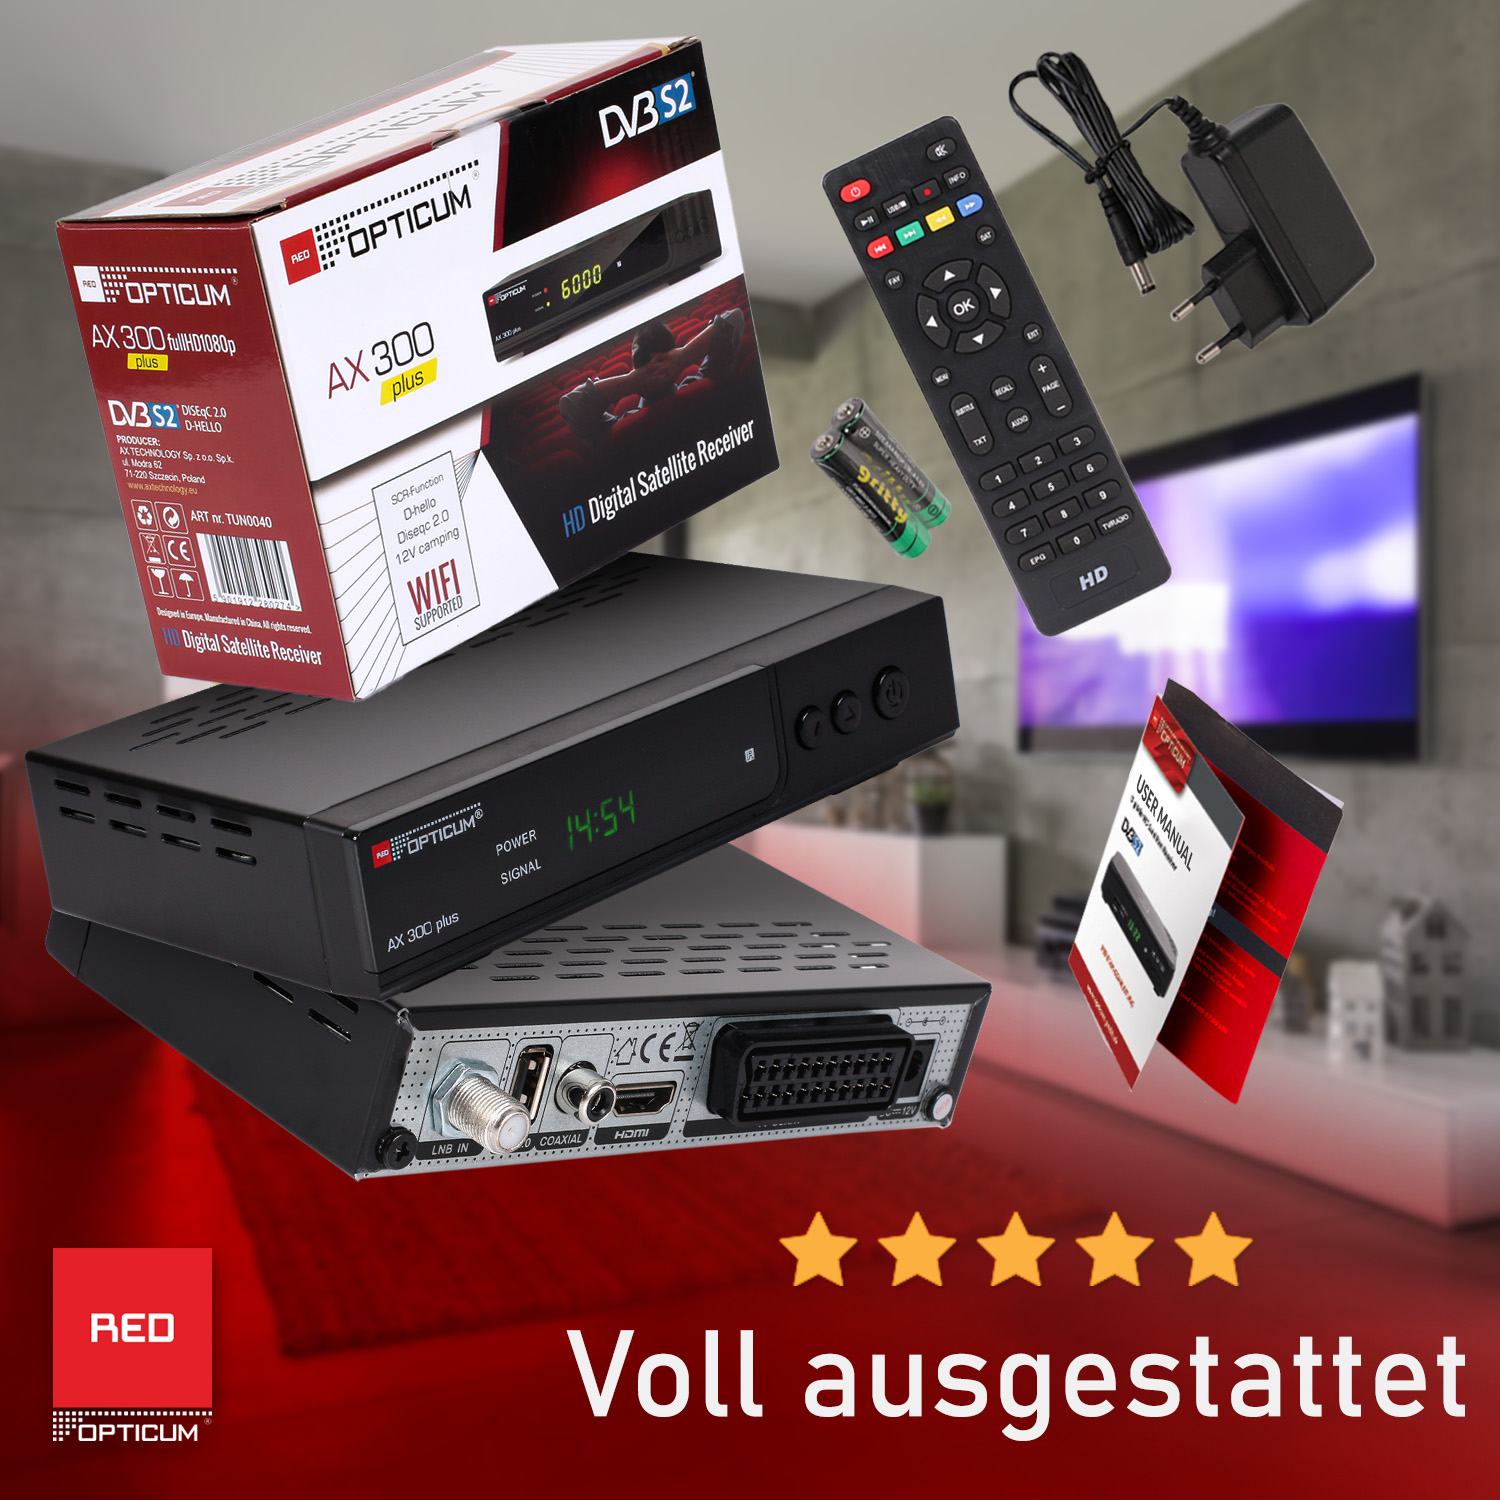 RED OPTICUM AX DVB-S, - HD Receiver DVB-S2 DVB-S2, Digitaler HD Sat HDMI Receiver schwarz) I USB 2.0 SCART Satelliten-Receiver - 300 Plus - DVB-S2 (HDTV, 